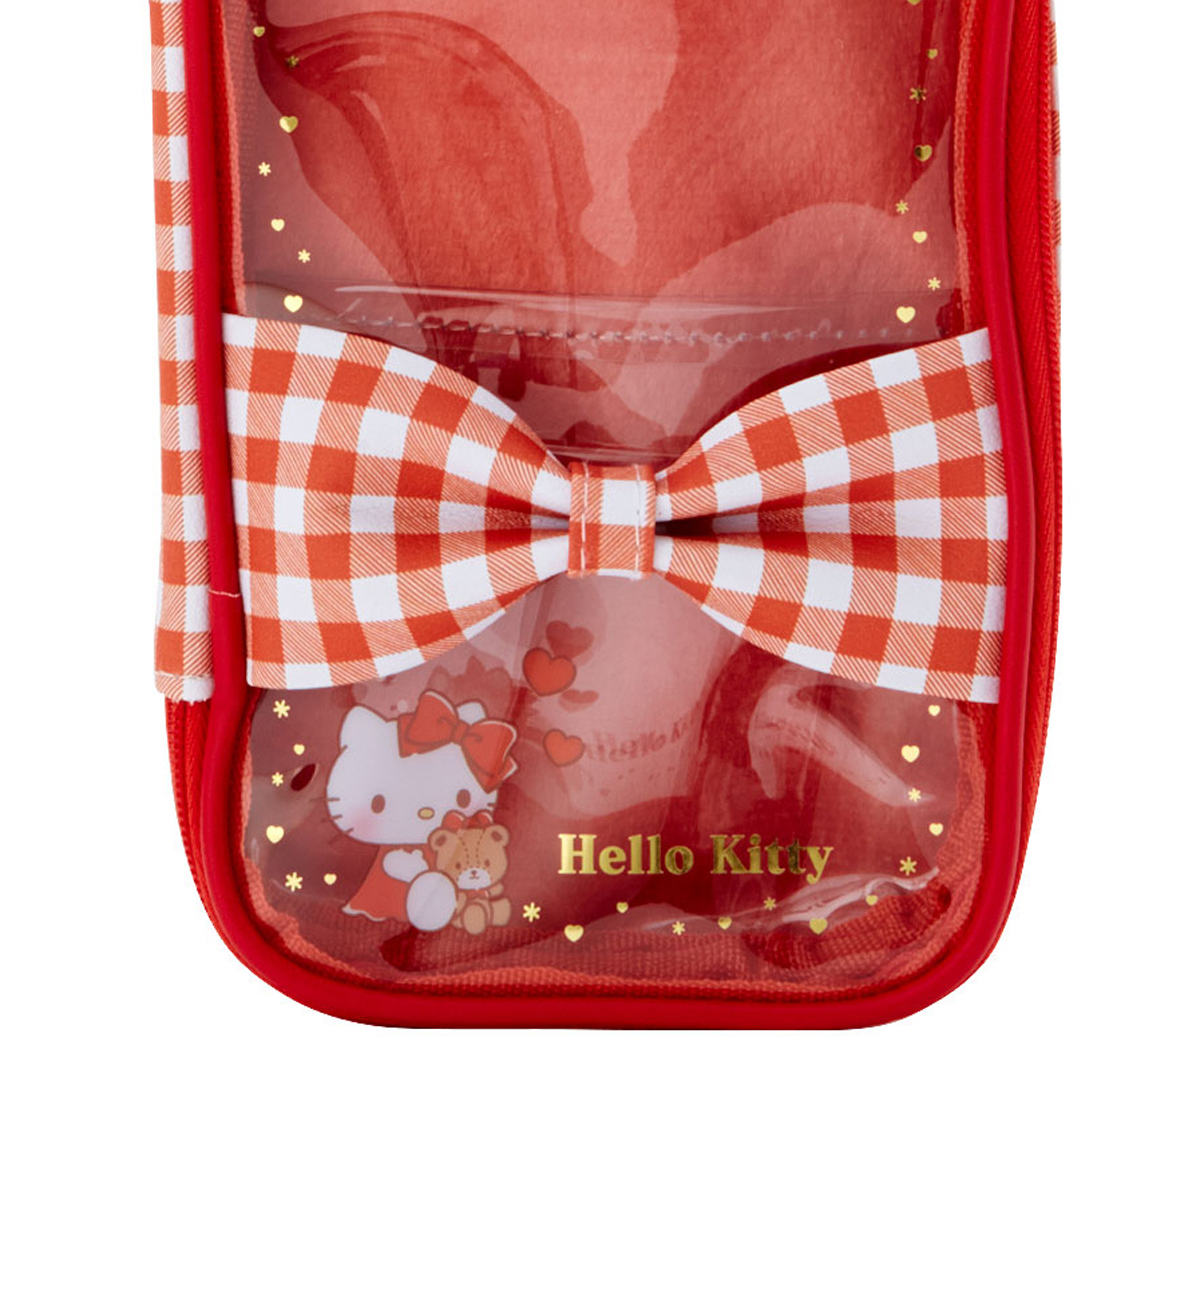 Hello Kitty Acrylic Stand Holder Pouch DX [Sanrio Enjoy Idol]